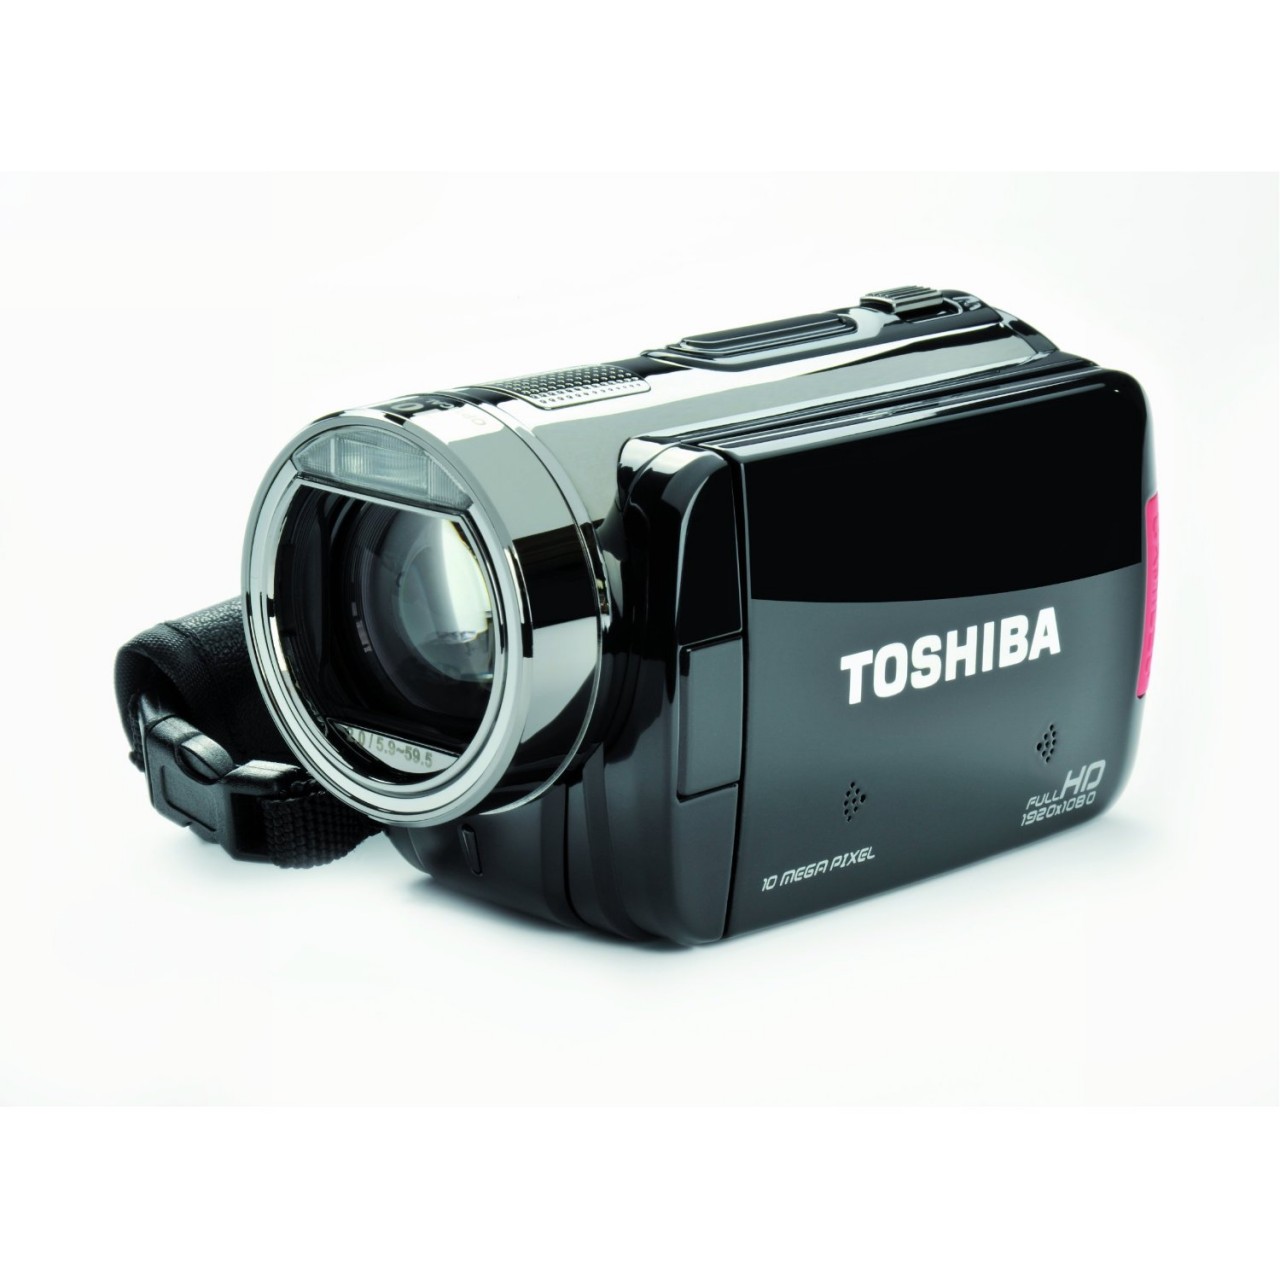 Toshiba Camileo X100 Full-HD Camcorder - Silver/Black